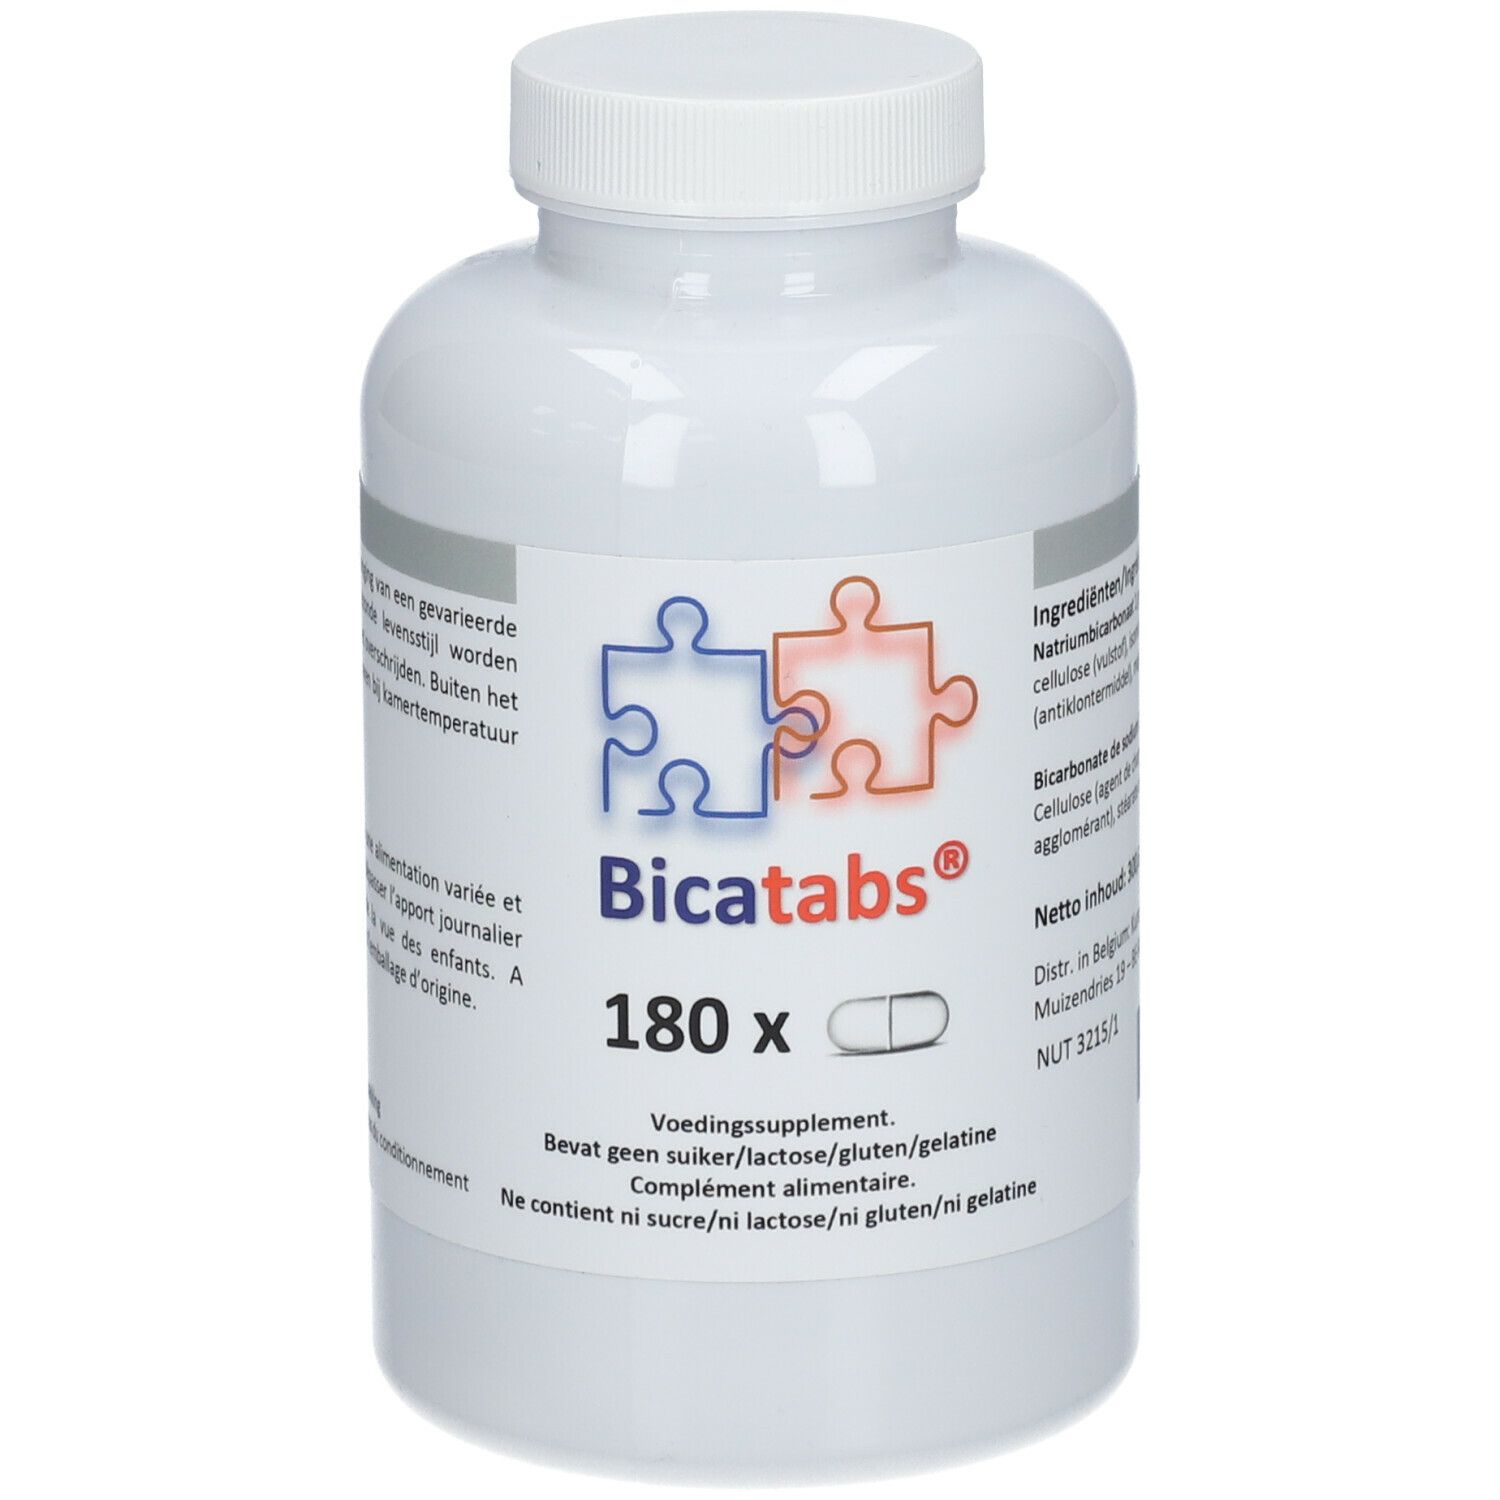 Image of Bicatabs®